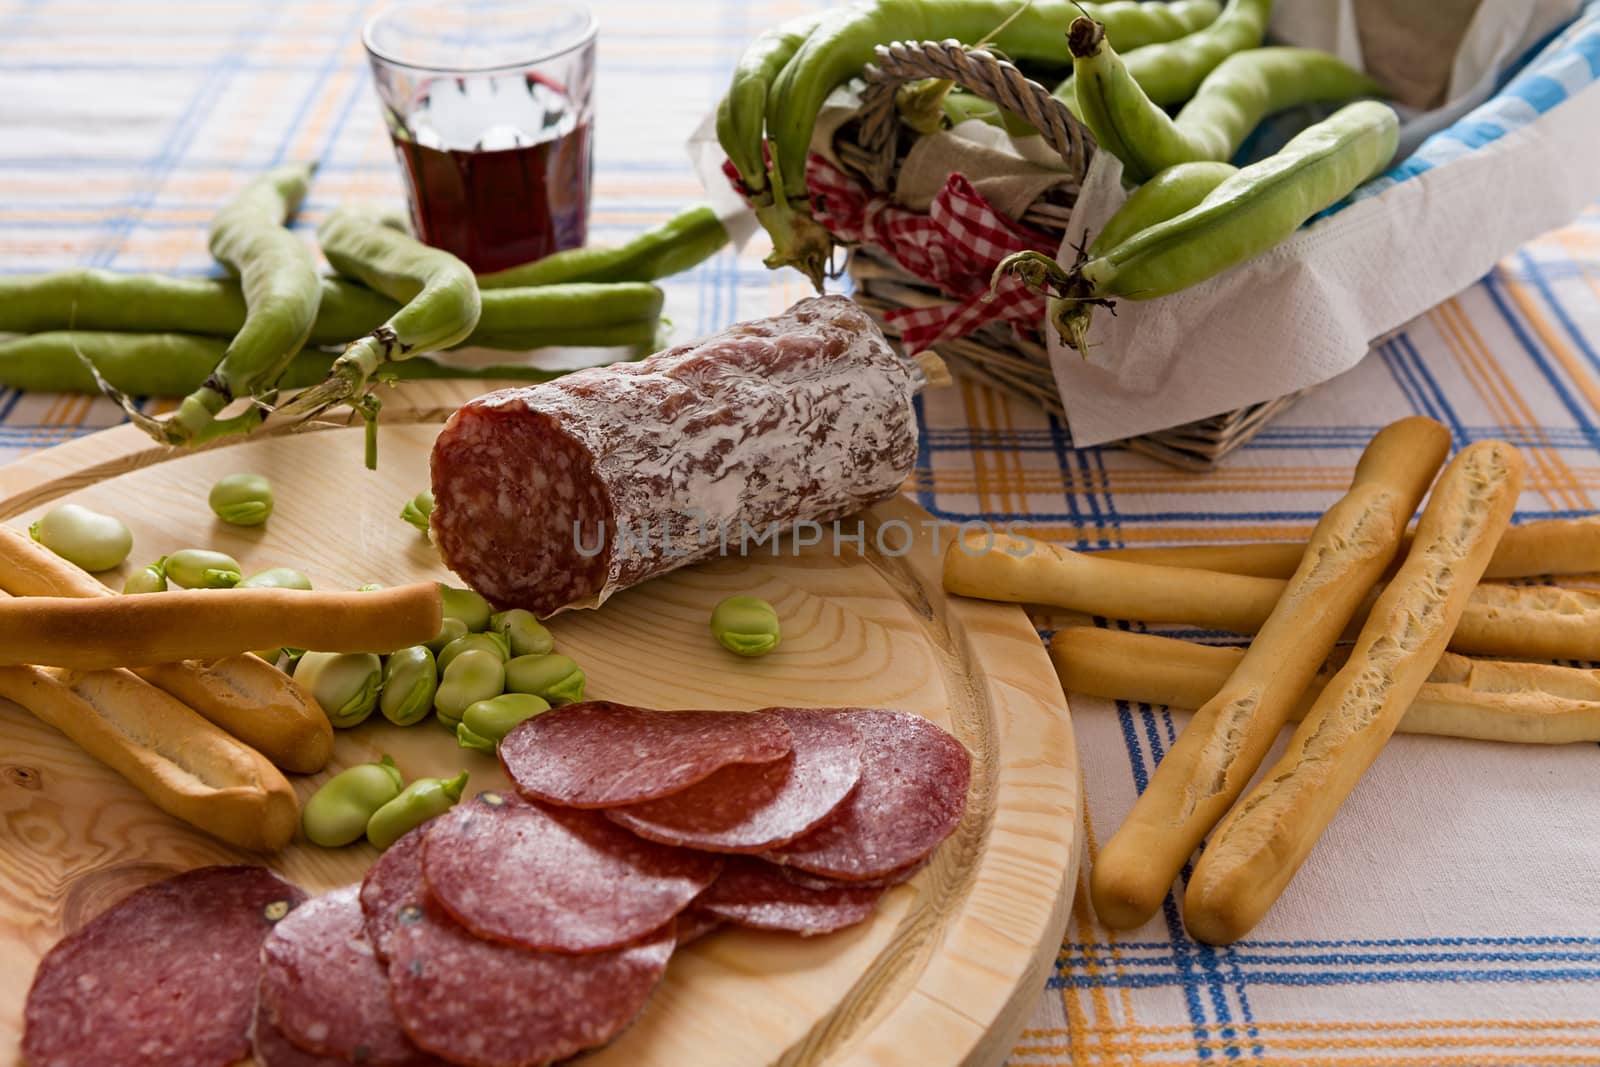 Italian salami broad bean and bread sticks over a chopping board